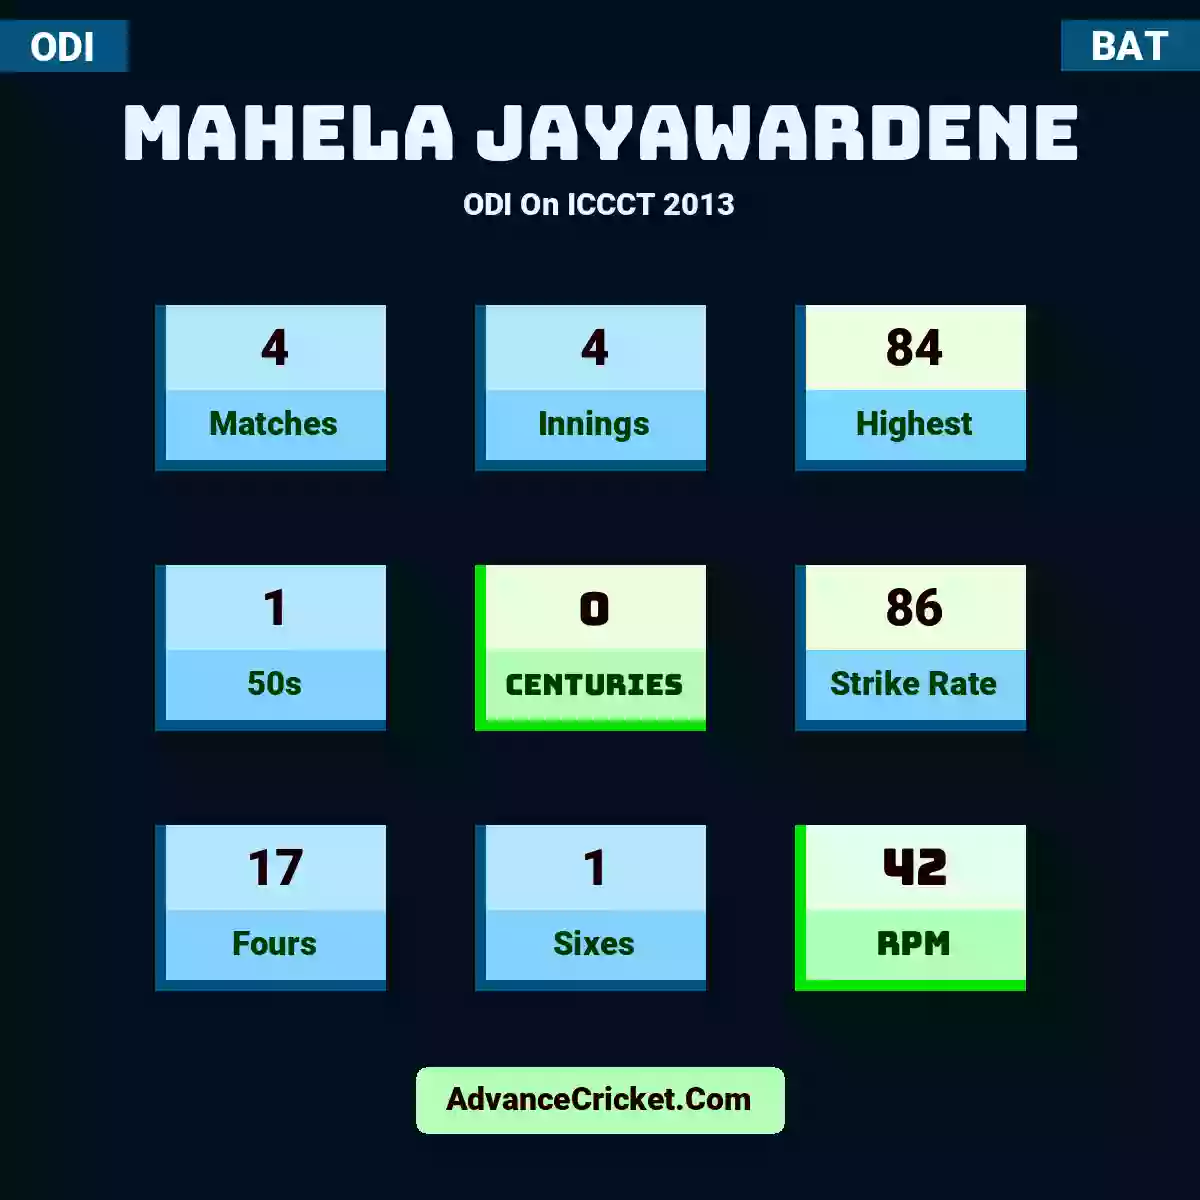 Mahela Jayawardene ODI  On ICCCT 2013, Mahela Jayawardene played 4 matches, scored 84 runs as highest, 1 half-centuries, and 0 centuries, with a strike rate of 86. M.Jayawardene hit 17 fours and 1 sixes, with an RPM of 42.